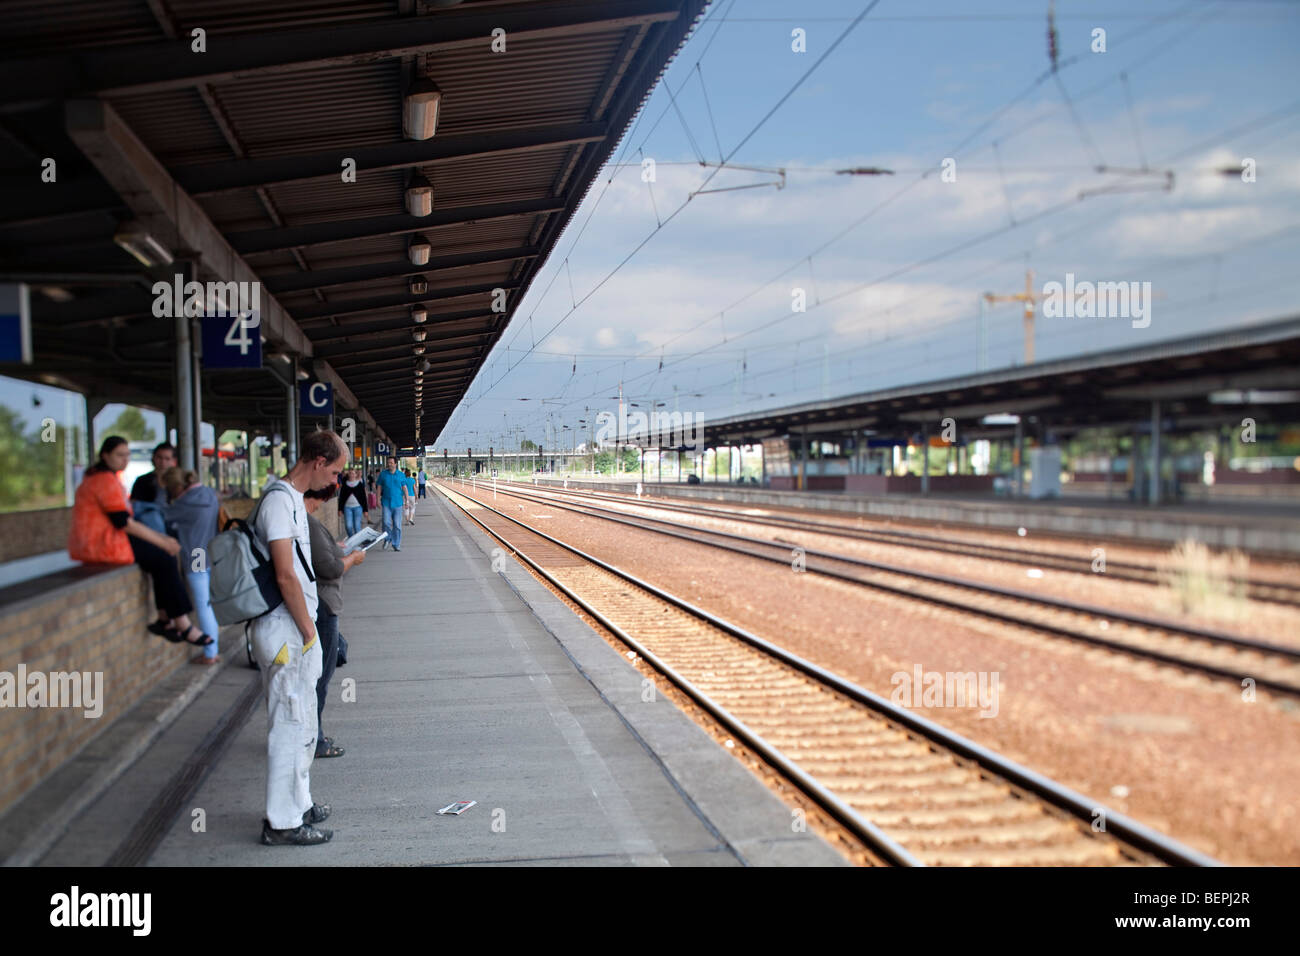 Sch nefeld railway station, Germany Stock Photo